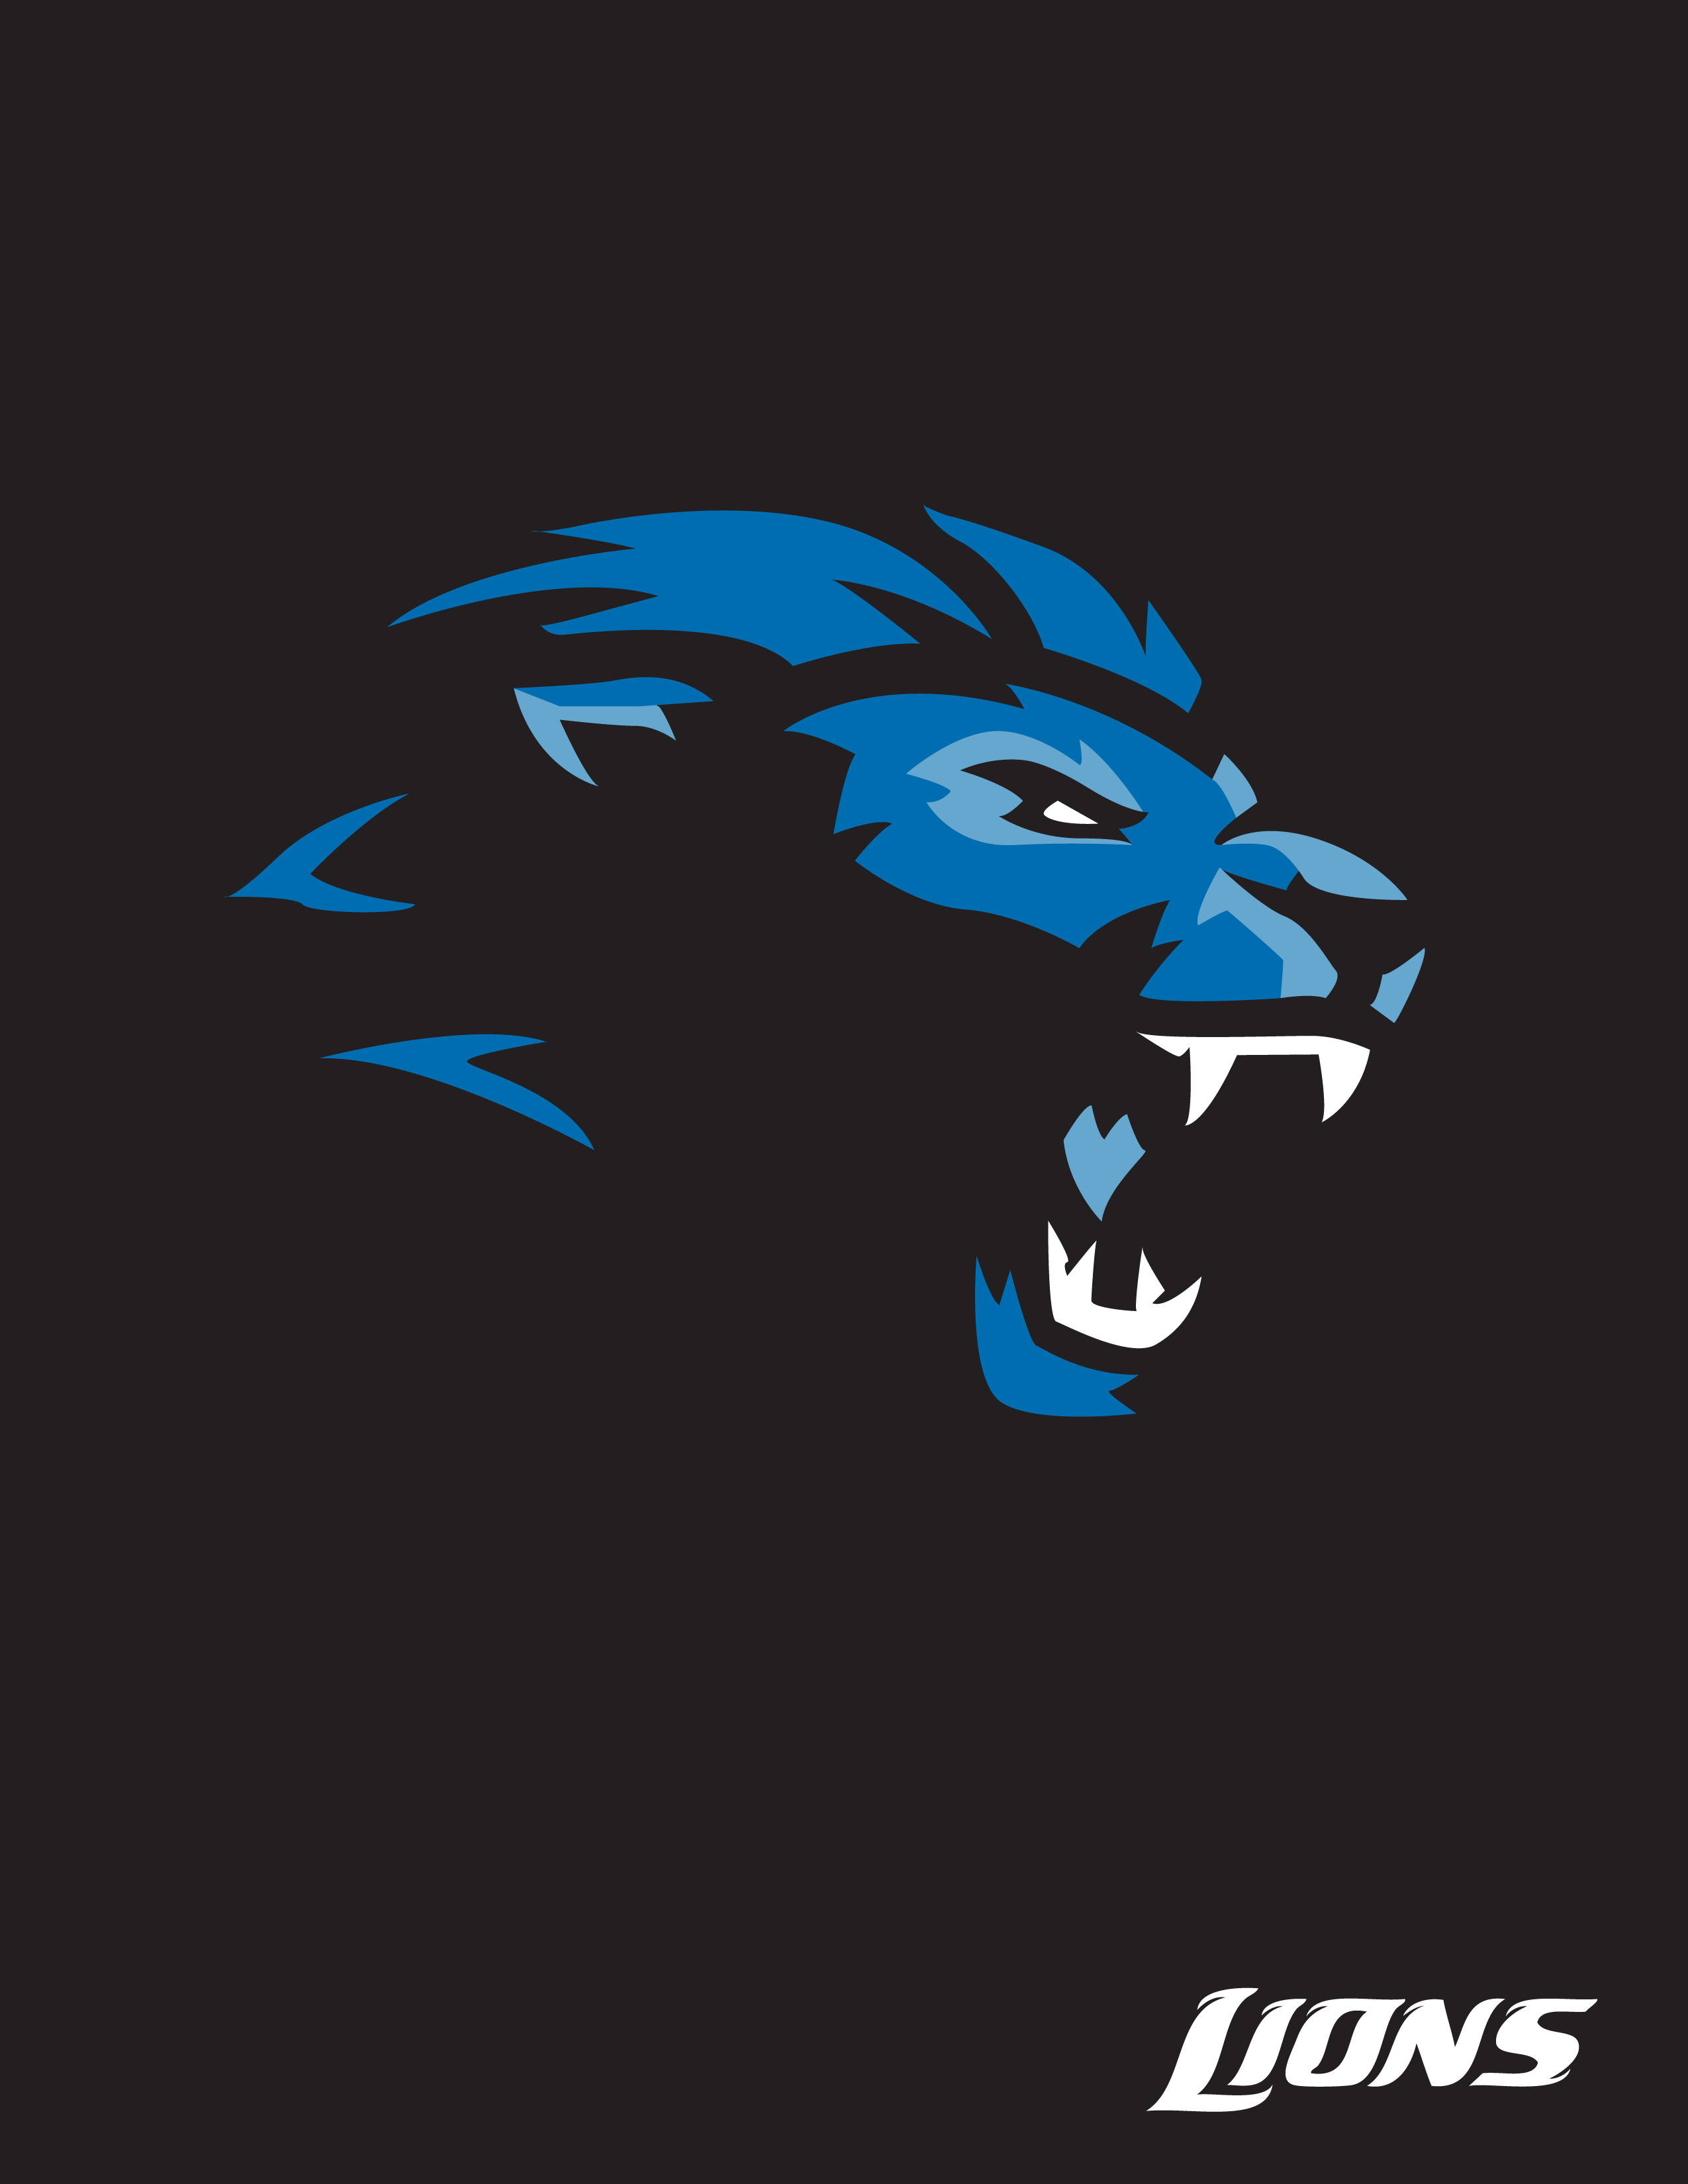 Detroit Lions Logo - Lions logo Design I did for fun